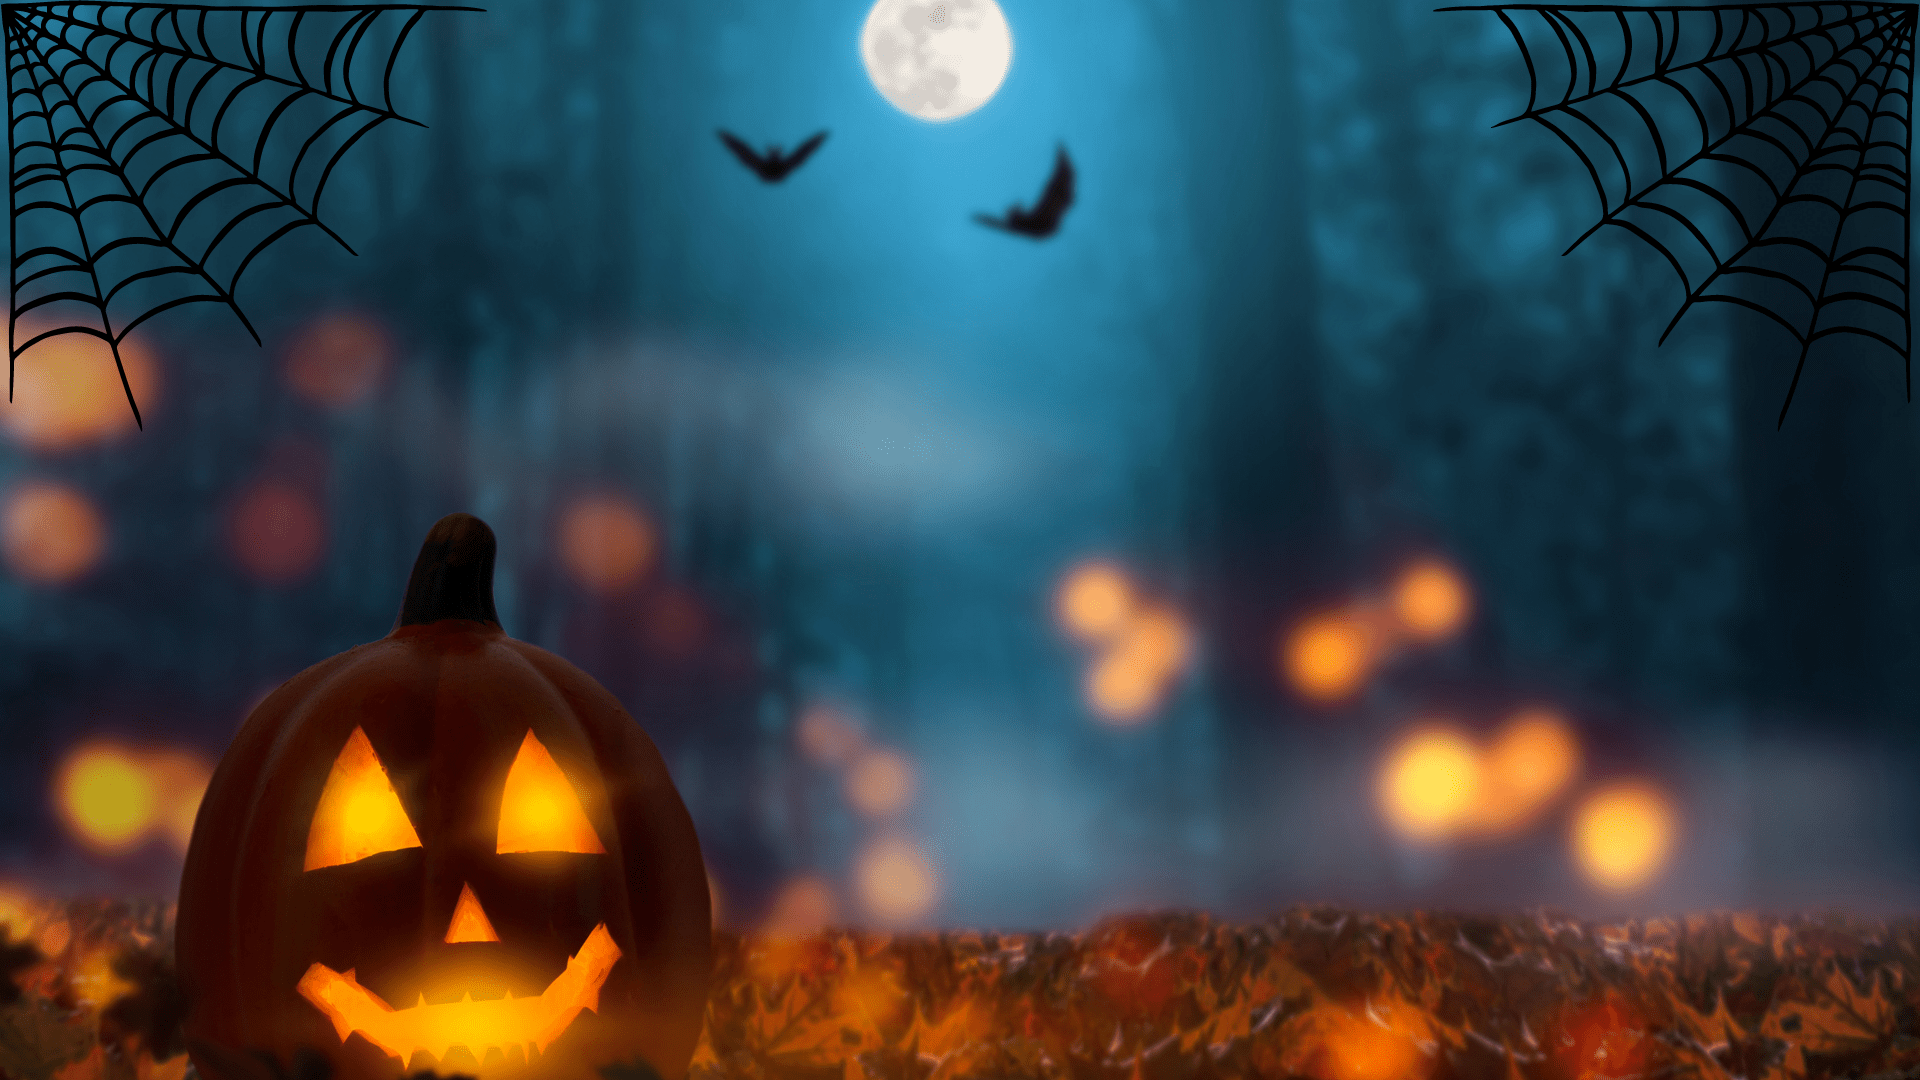 A pumpkin in a spooky forest - Halloween desktop, Halloween